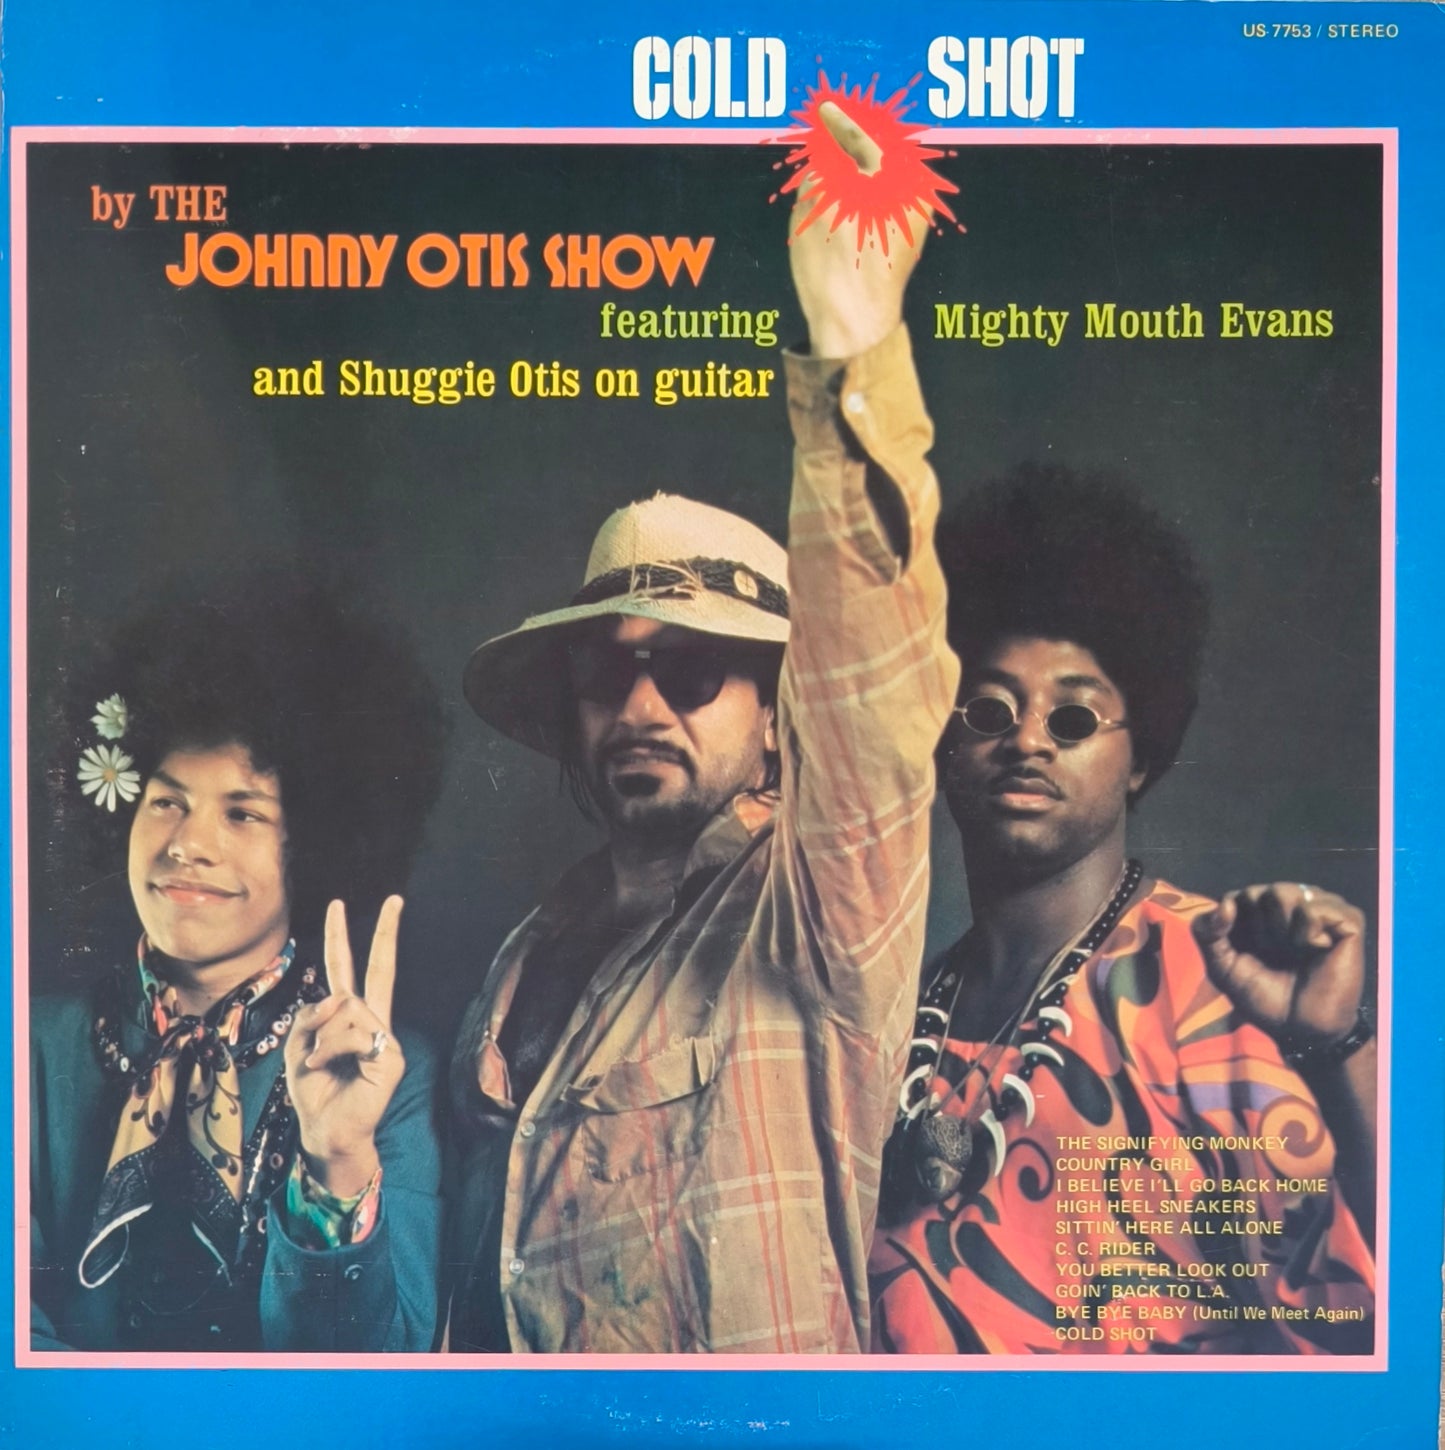 THE JOHNNY OTIS SHOW - Cold Shot!